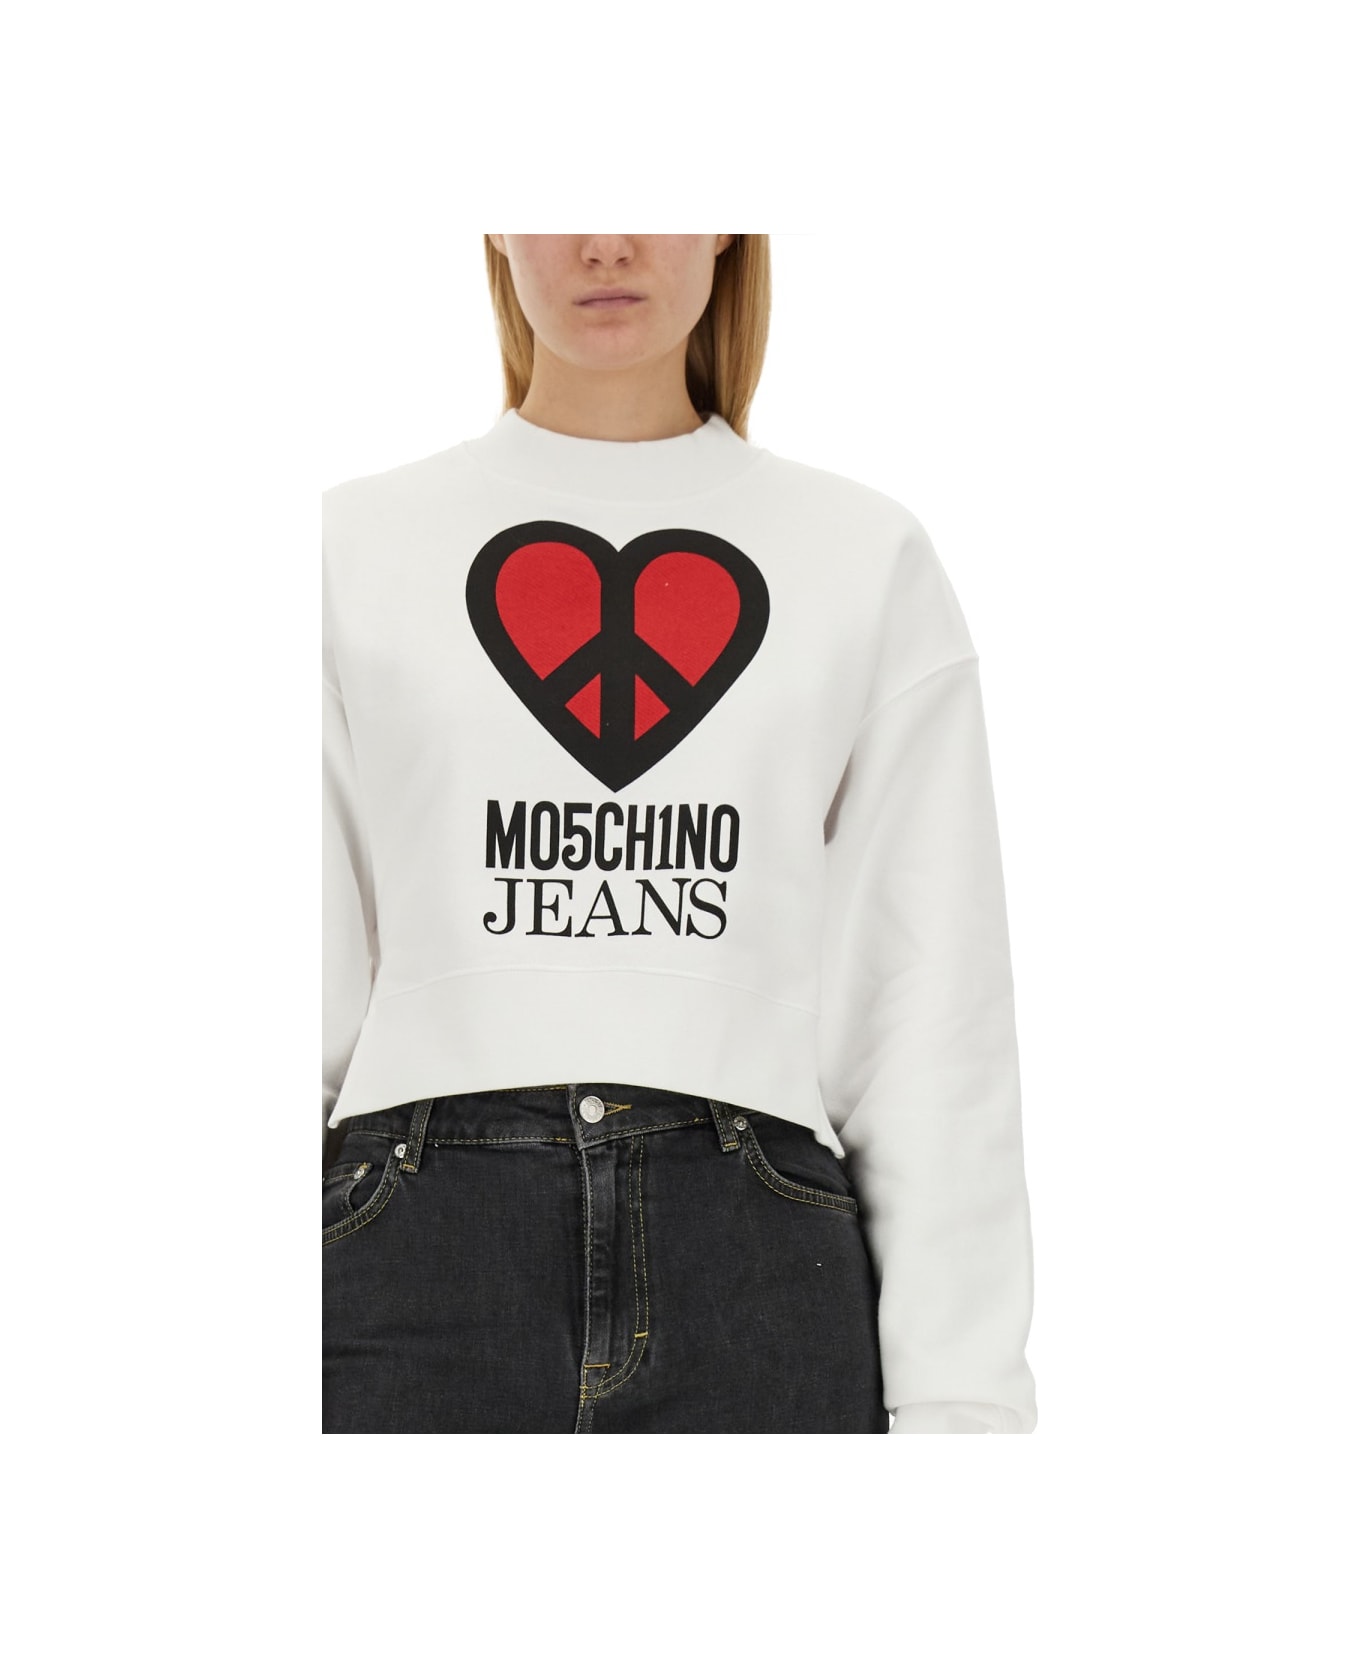 M05CH1N0 Jeans Sweatshirt With Logo - WHITE